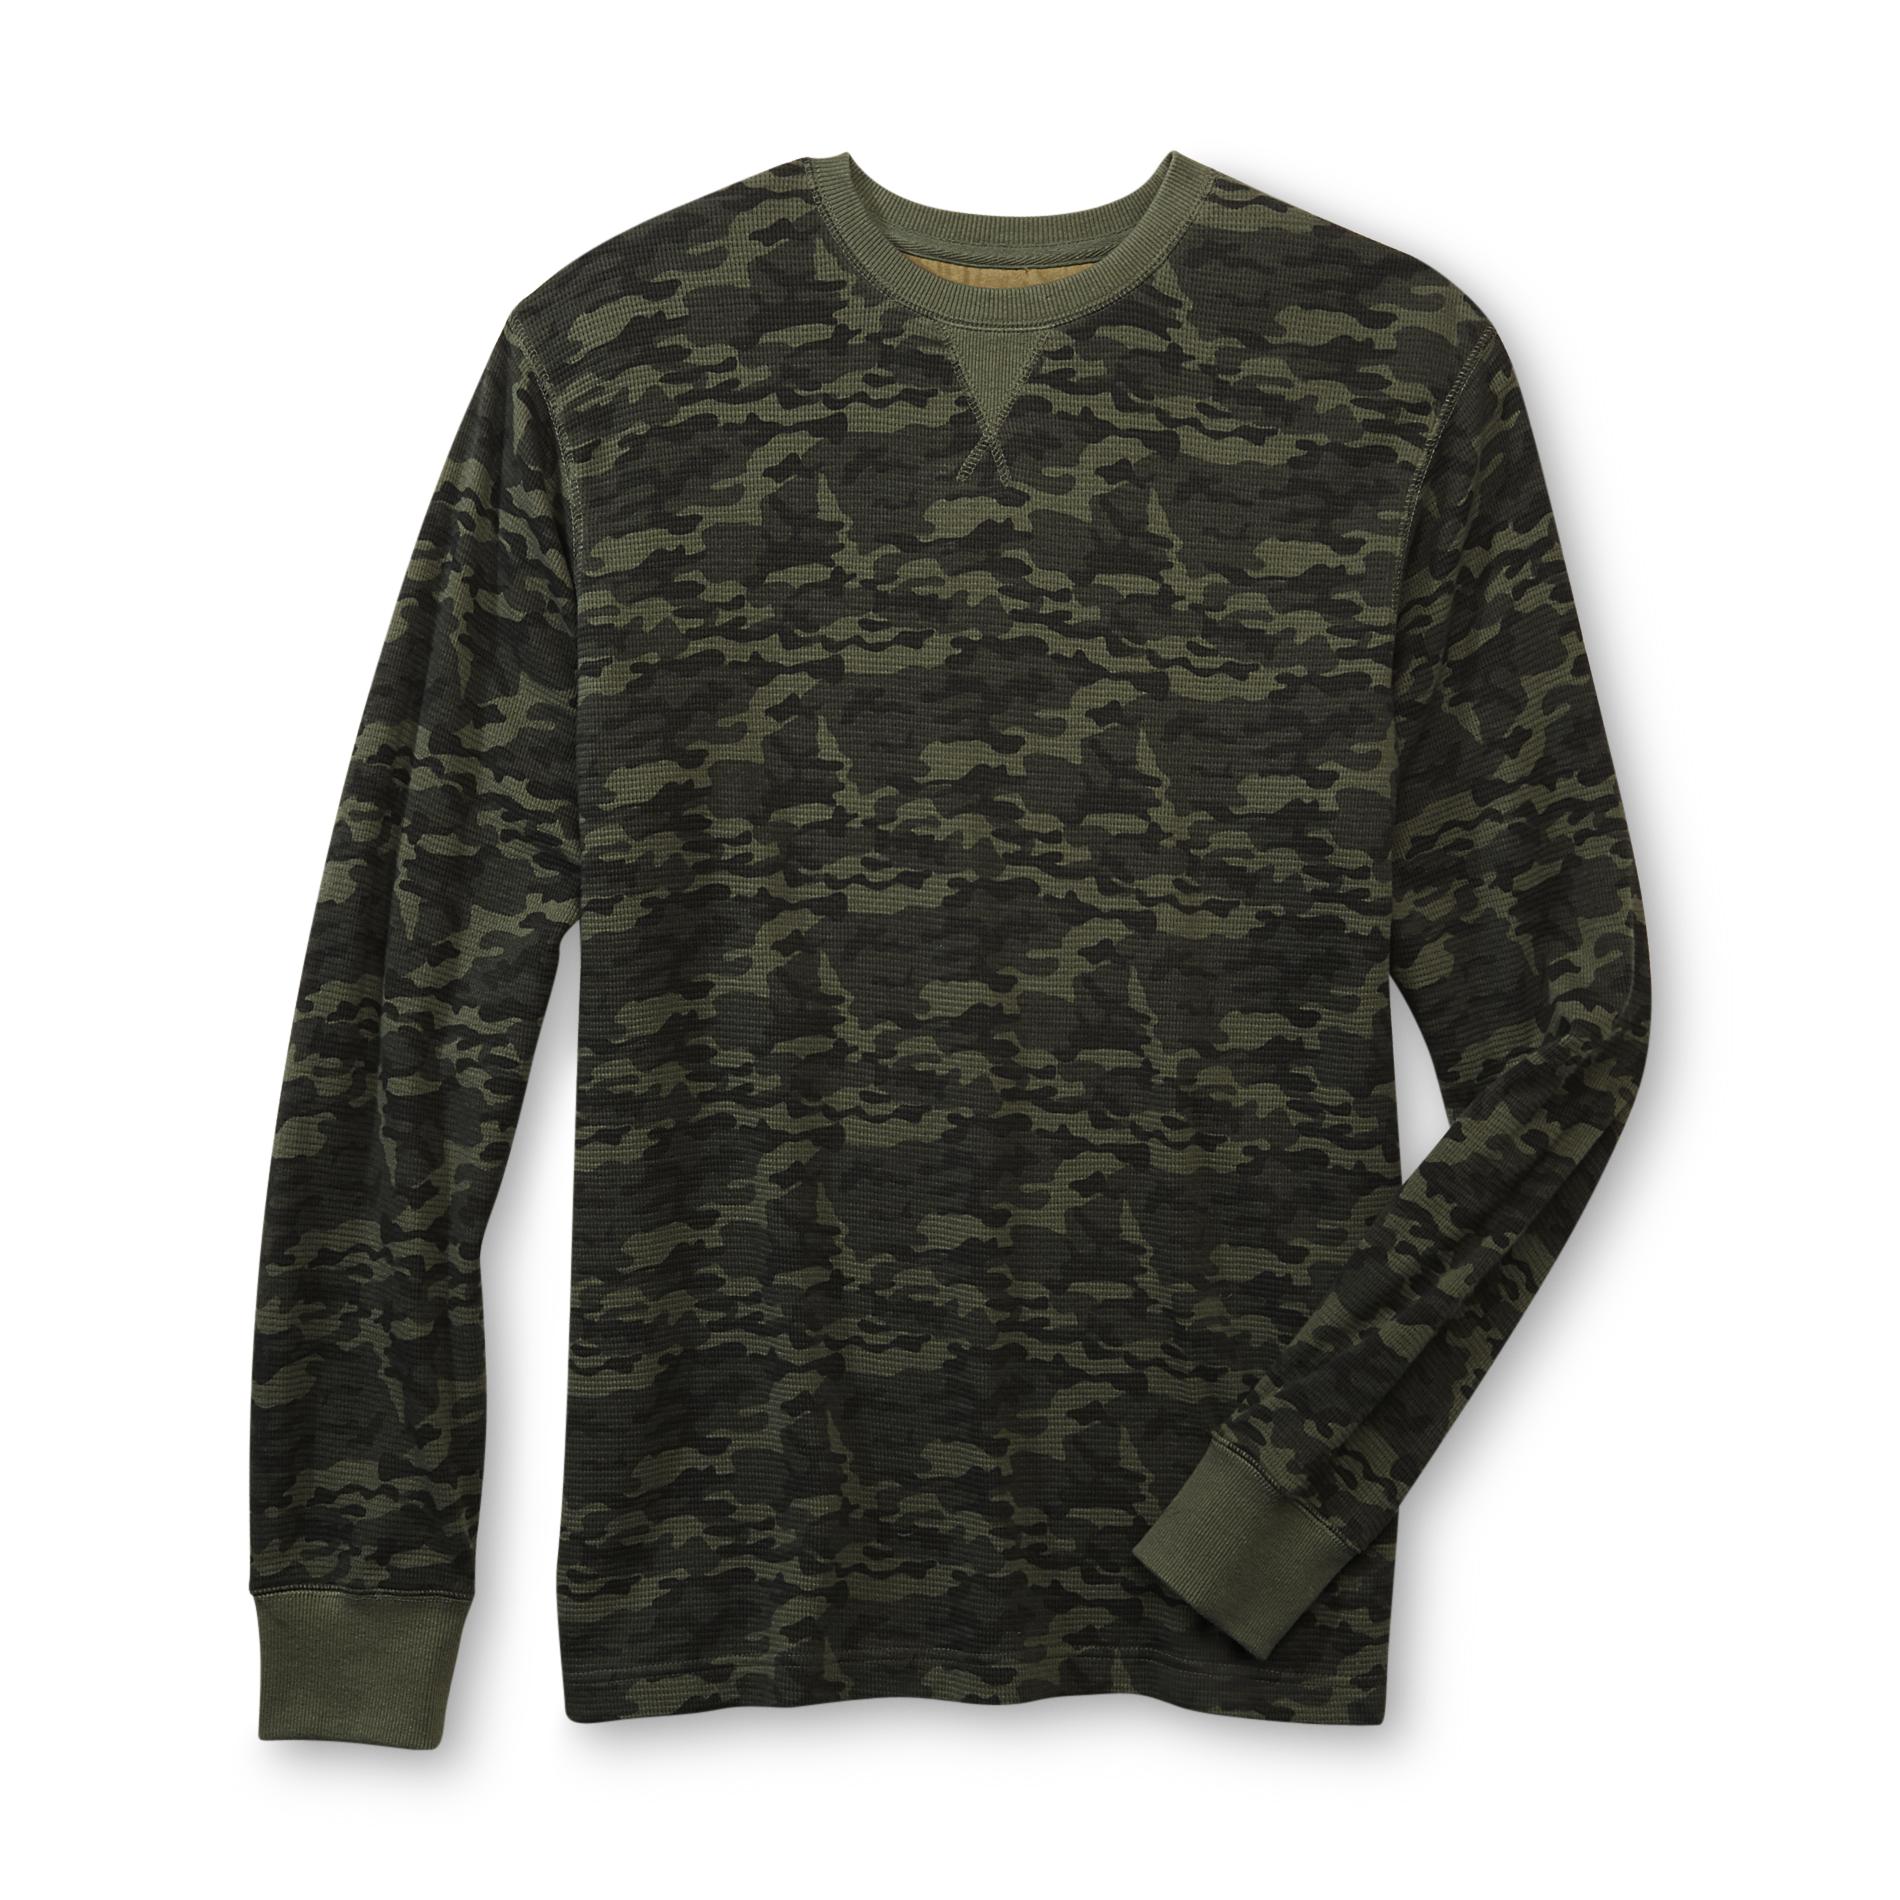 Northwest Territory Men's Big & Tall Thermal Sweatshirt - Camouflage Print